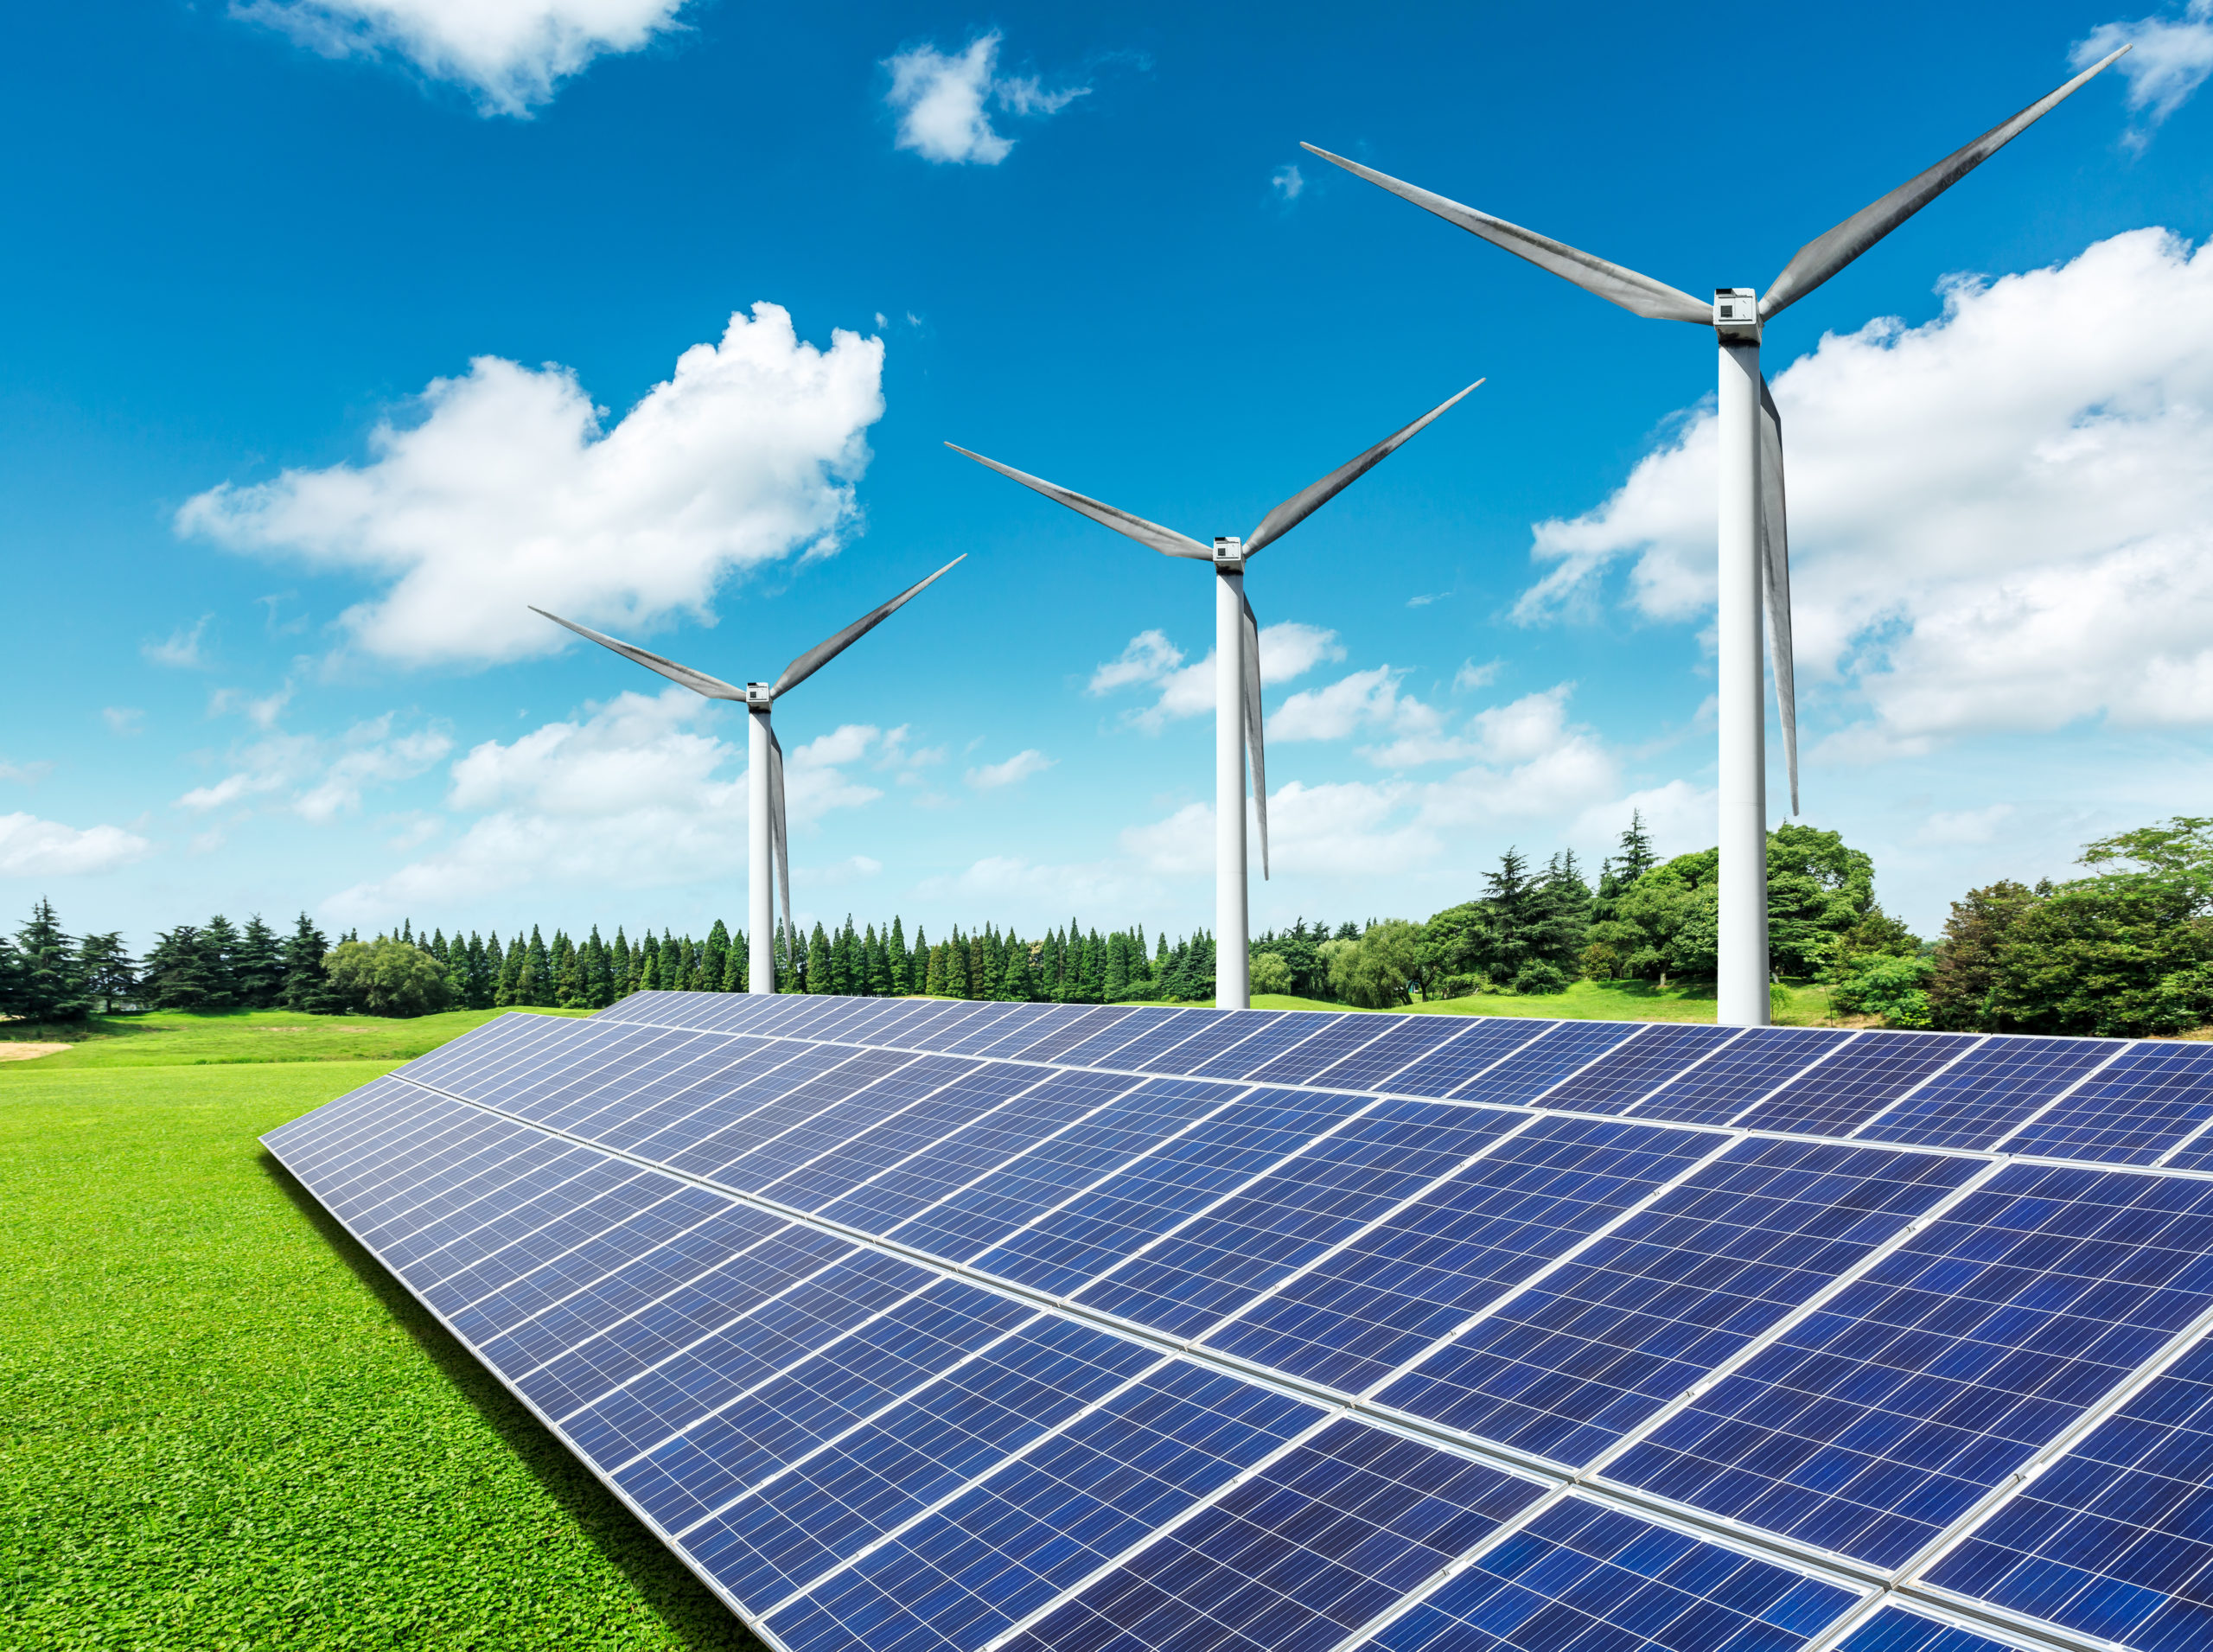 Solar panels and wind turbines in green grass field